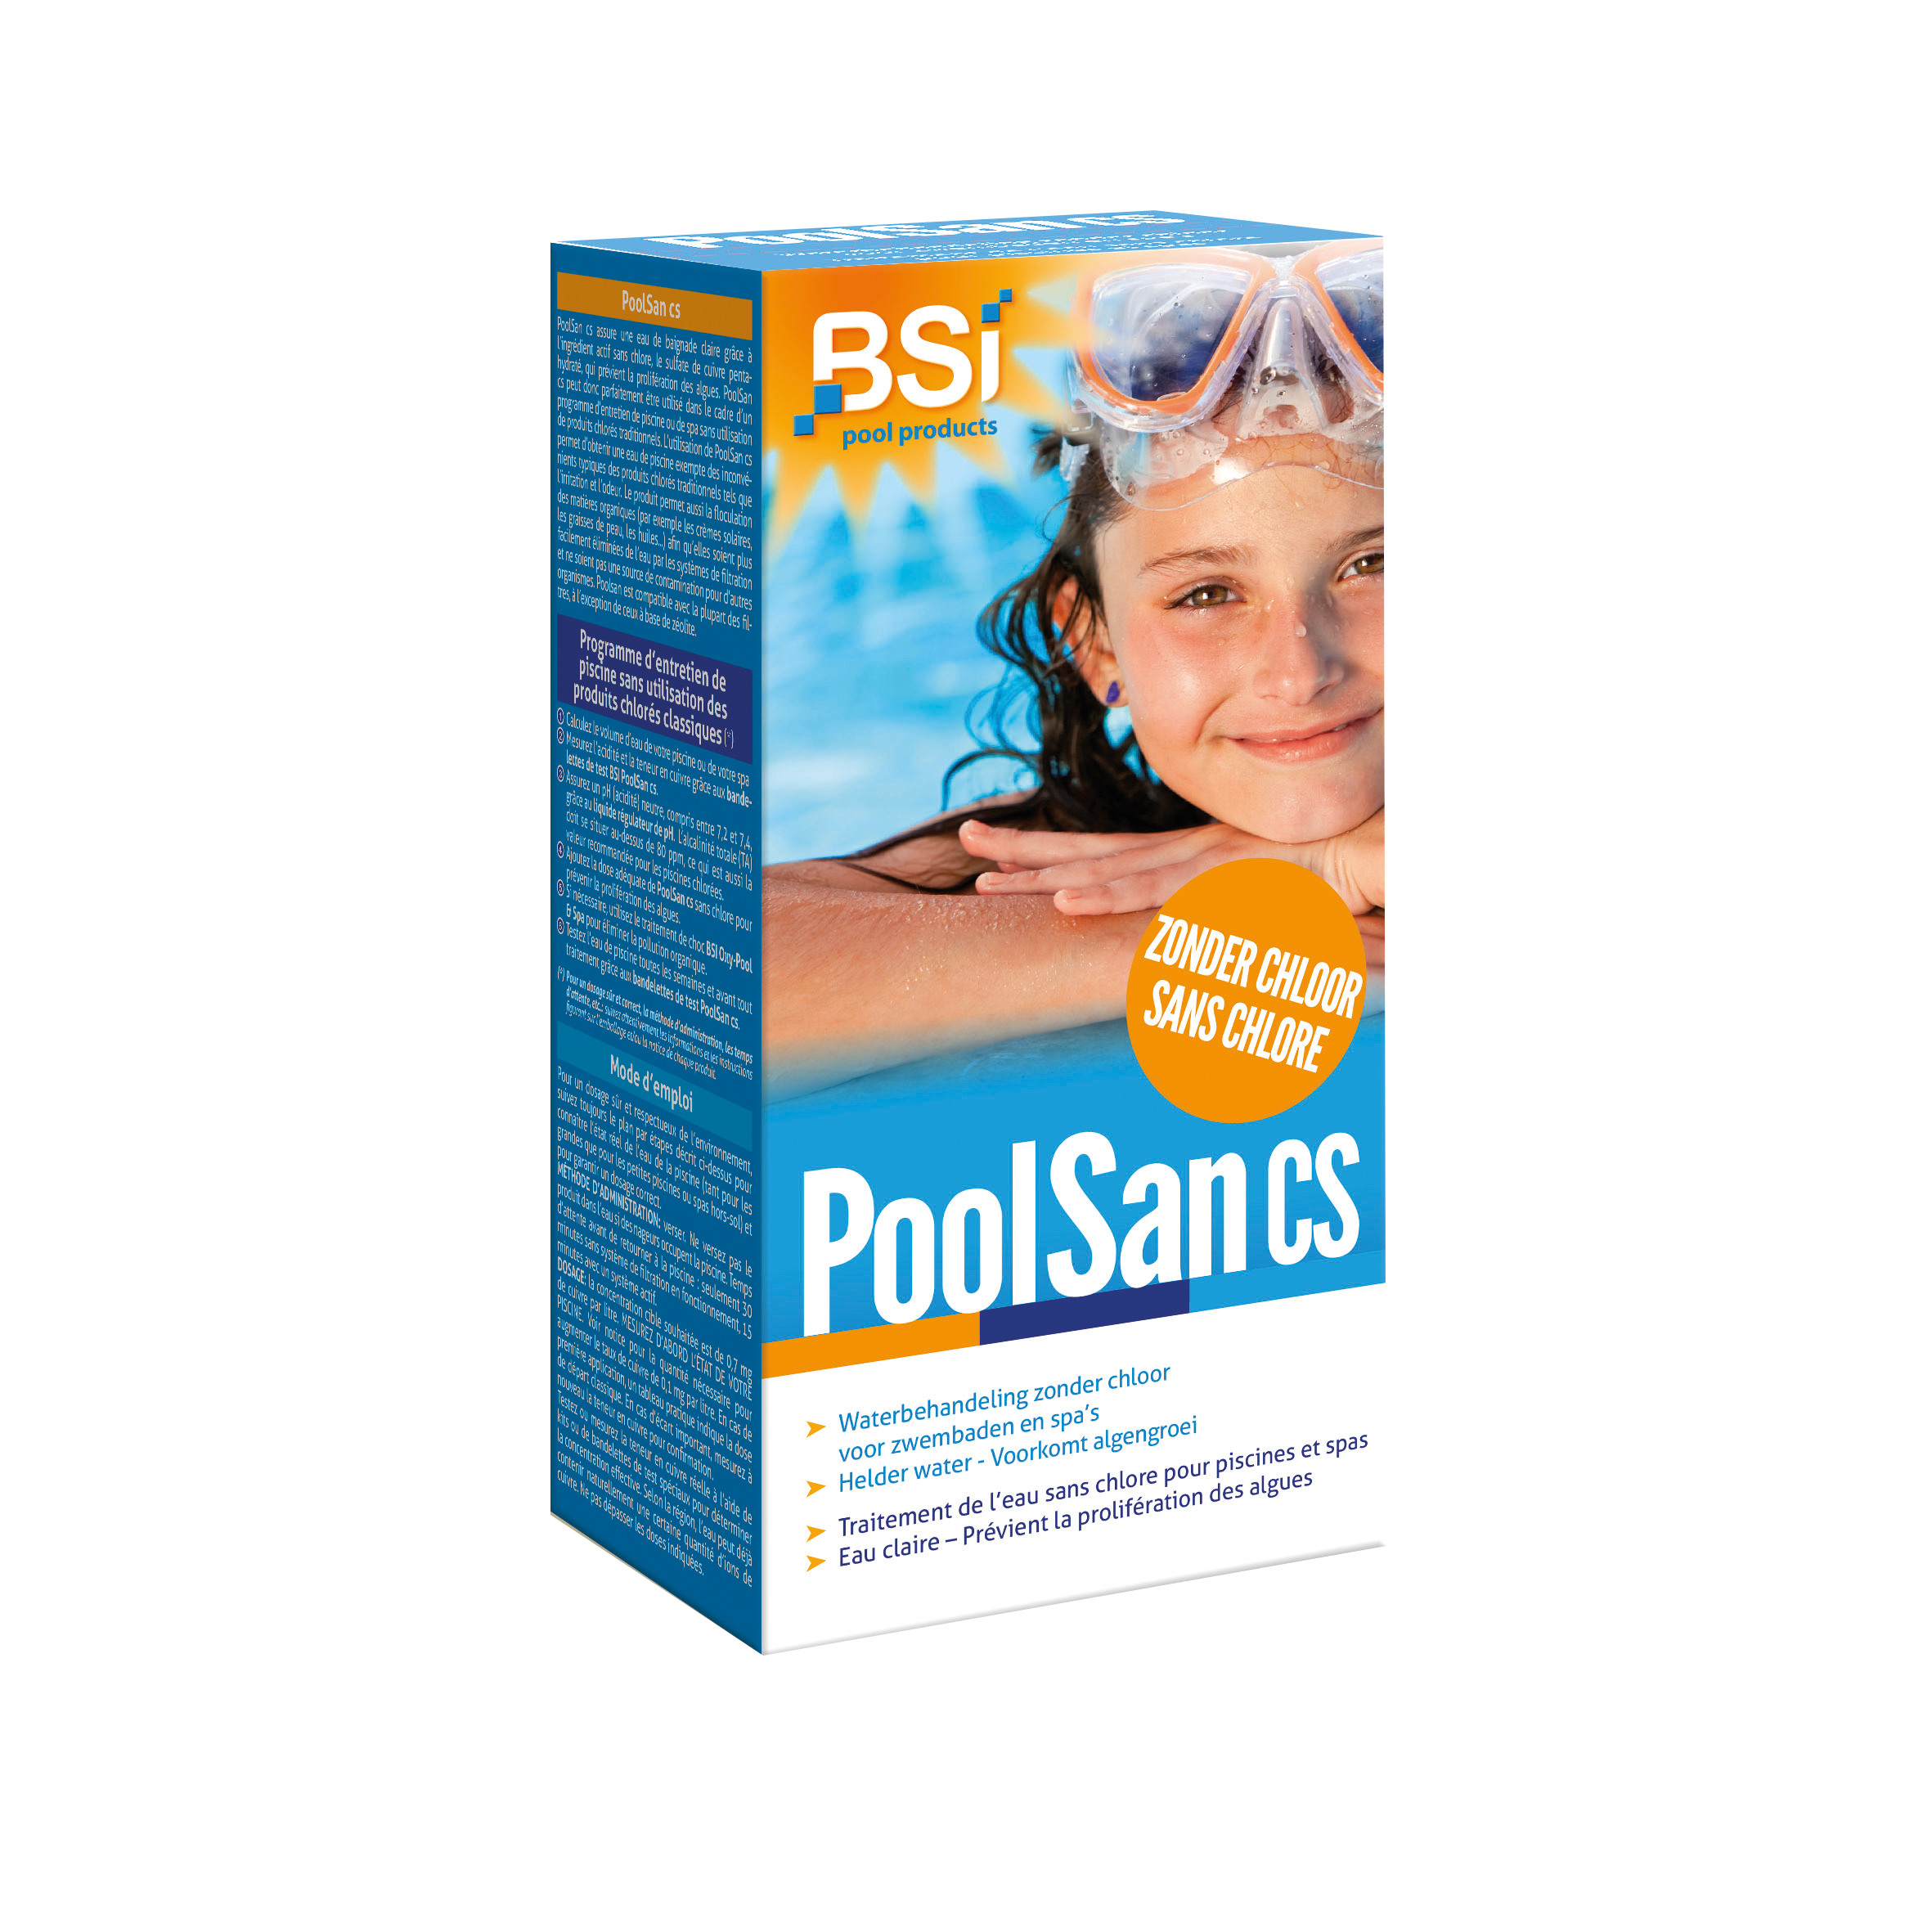 PoolSan cs (BE2020-0005) - BSI 250 ml image